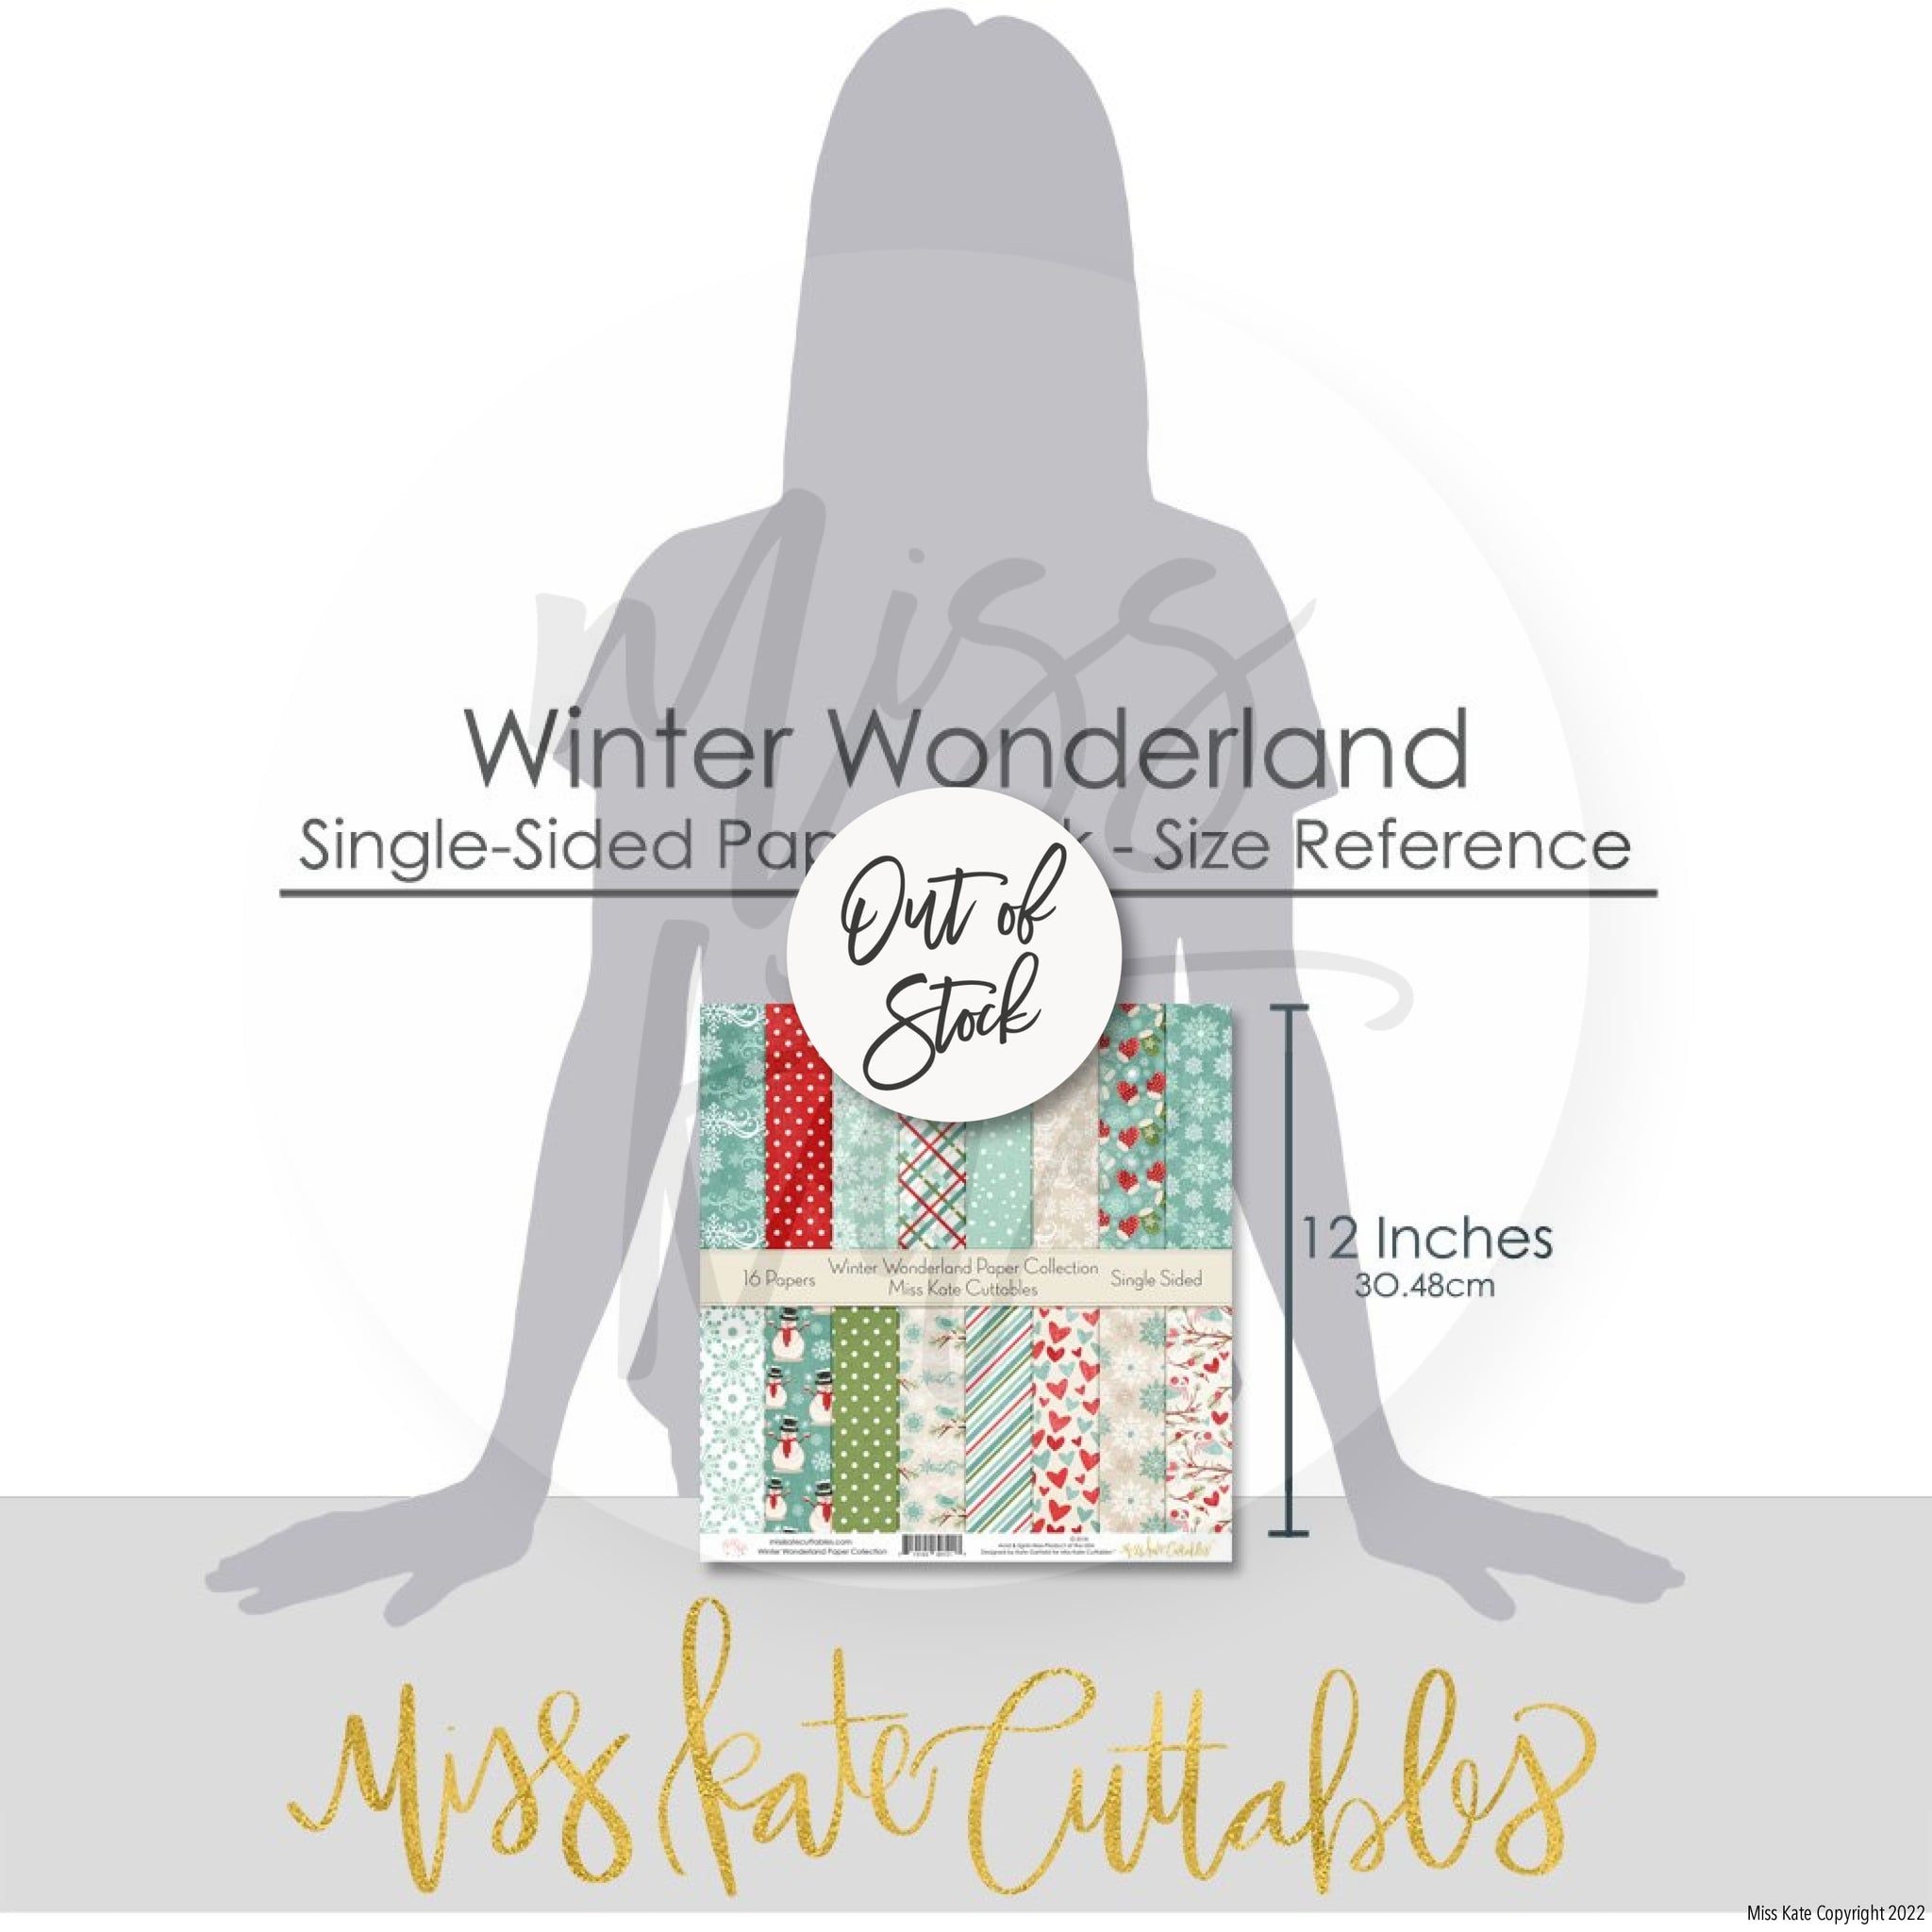 Winter Wonderland - Paper Pack